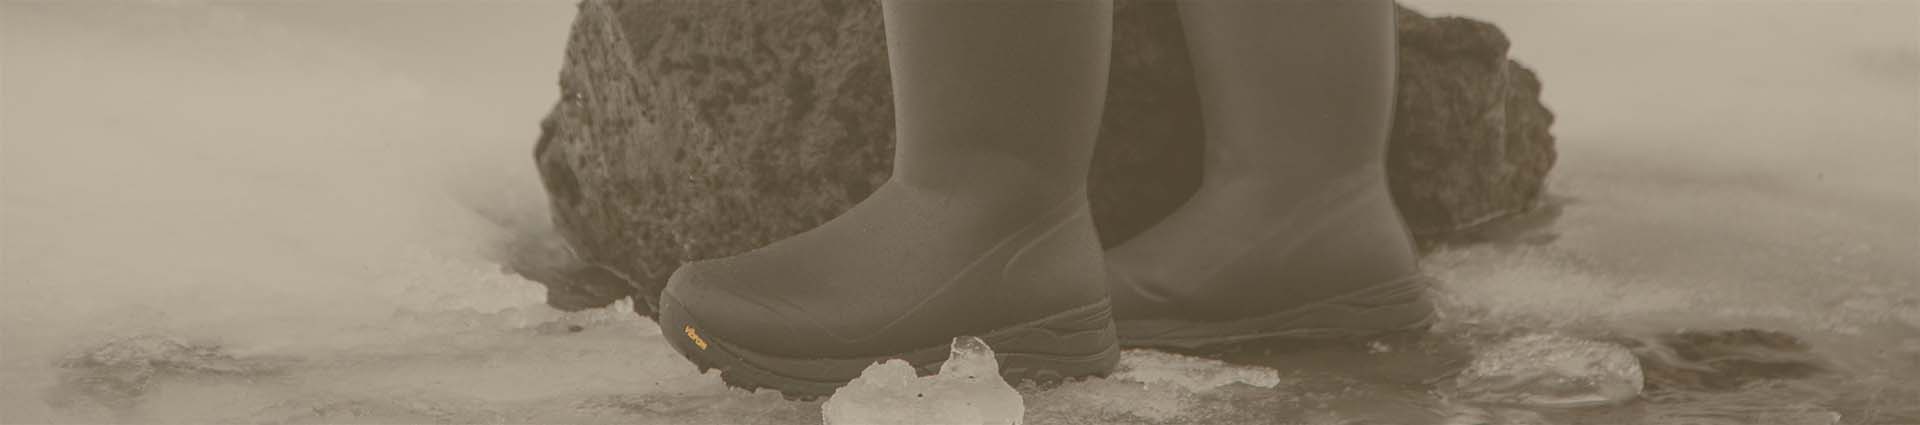 muck boot company Vibram Arctic Grip All Terrain collection